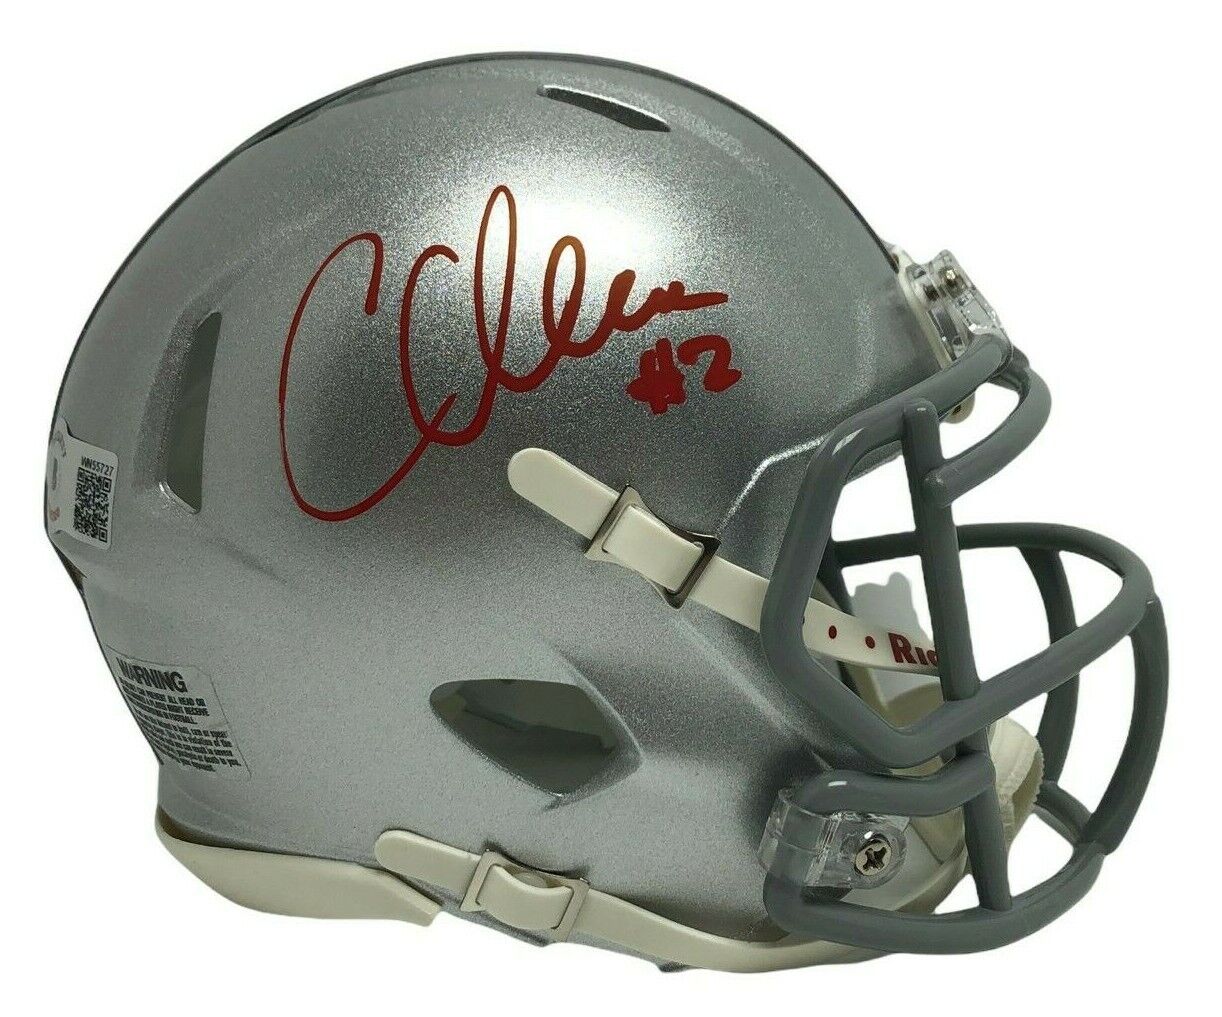 Chris Olave Signed Ohio Speed Inexpensive Max 52% OFF State BAS Mini-Helmet